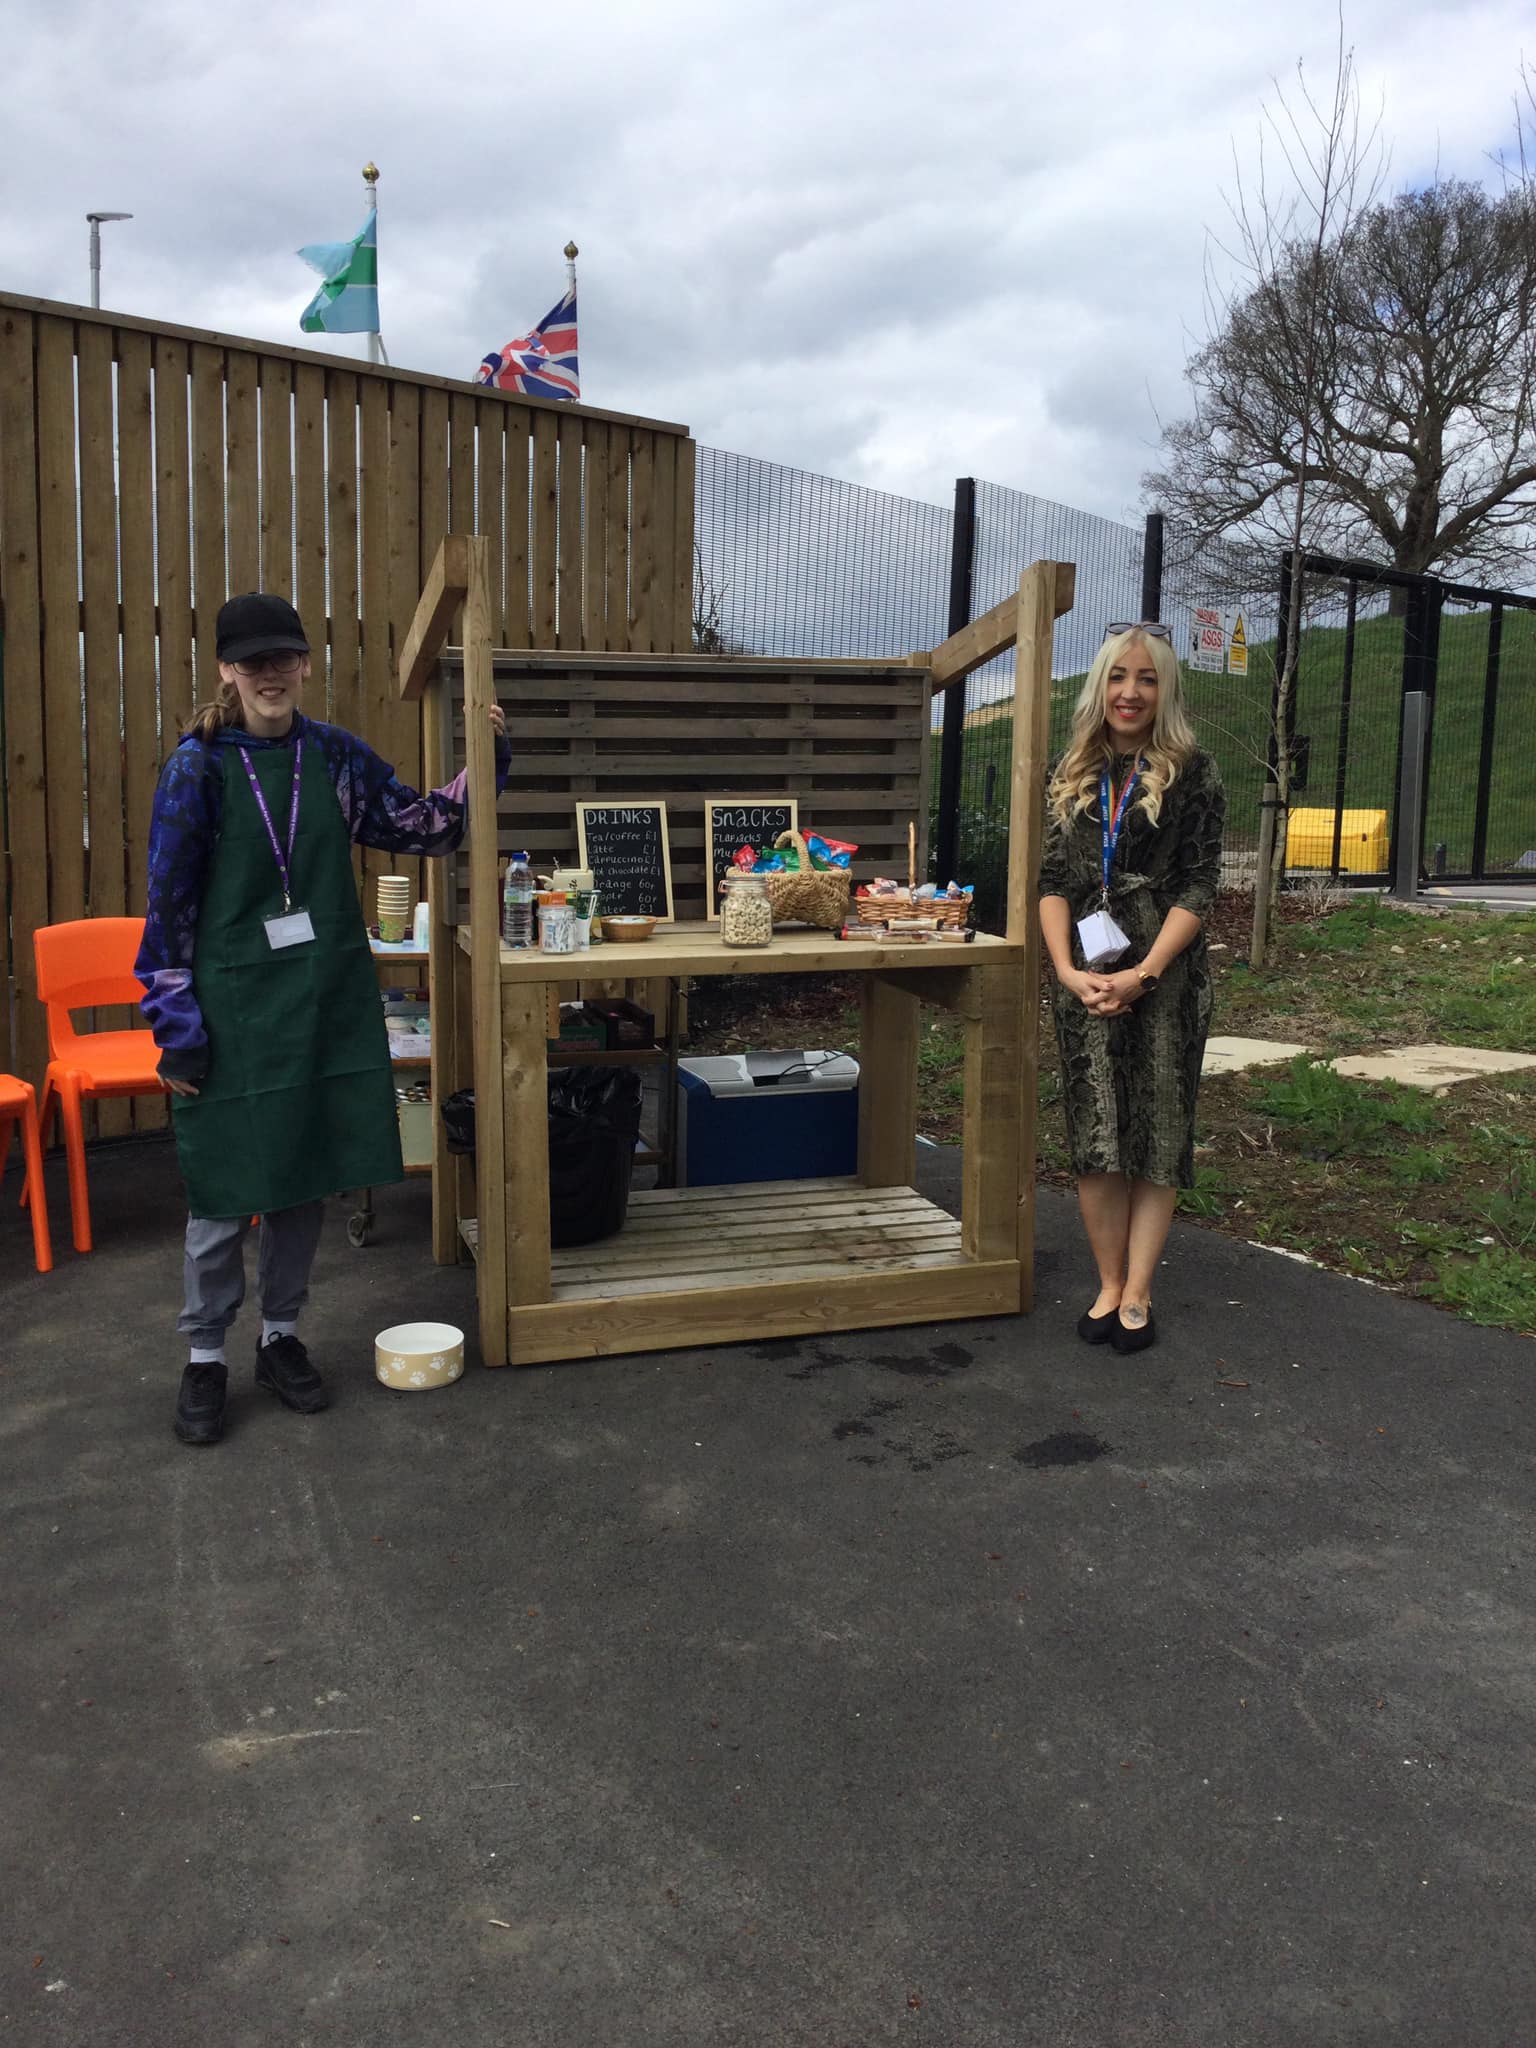 Alfreton Park School has opened a pop-up cafe outside its school gates